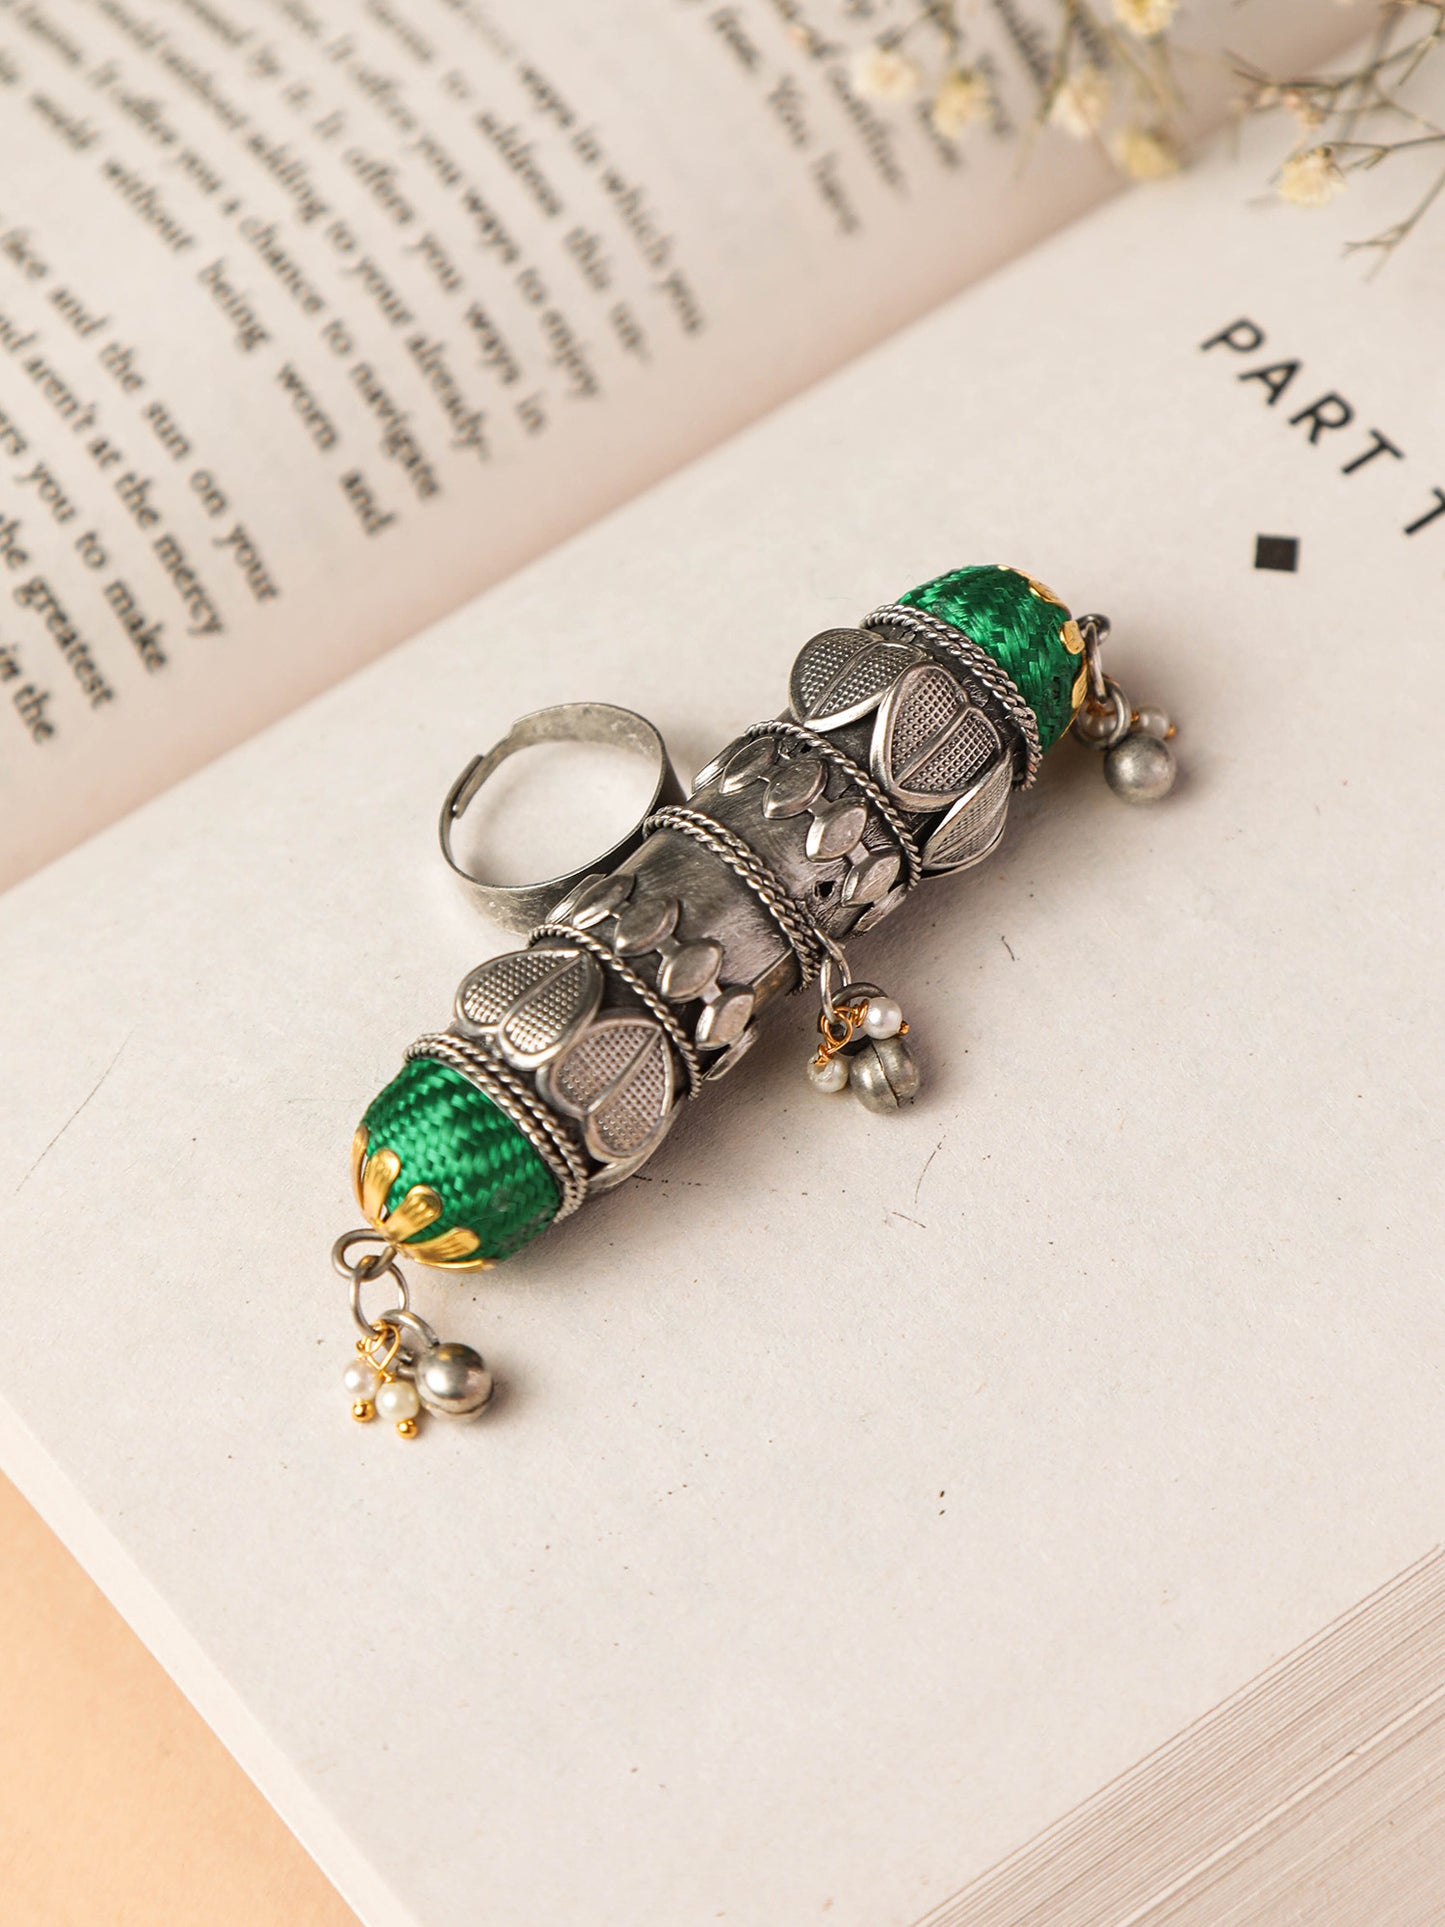 The Green Jewel Caterpillar Ring